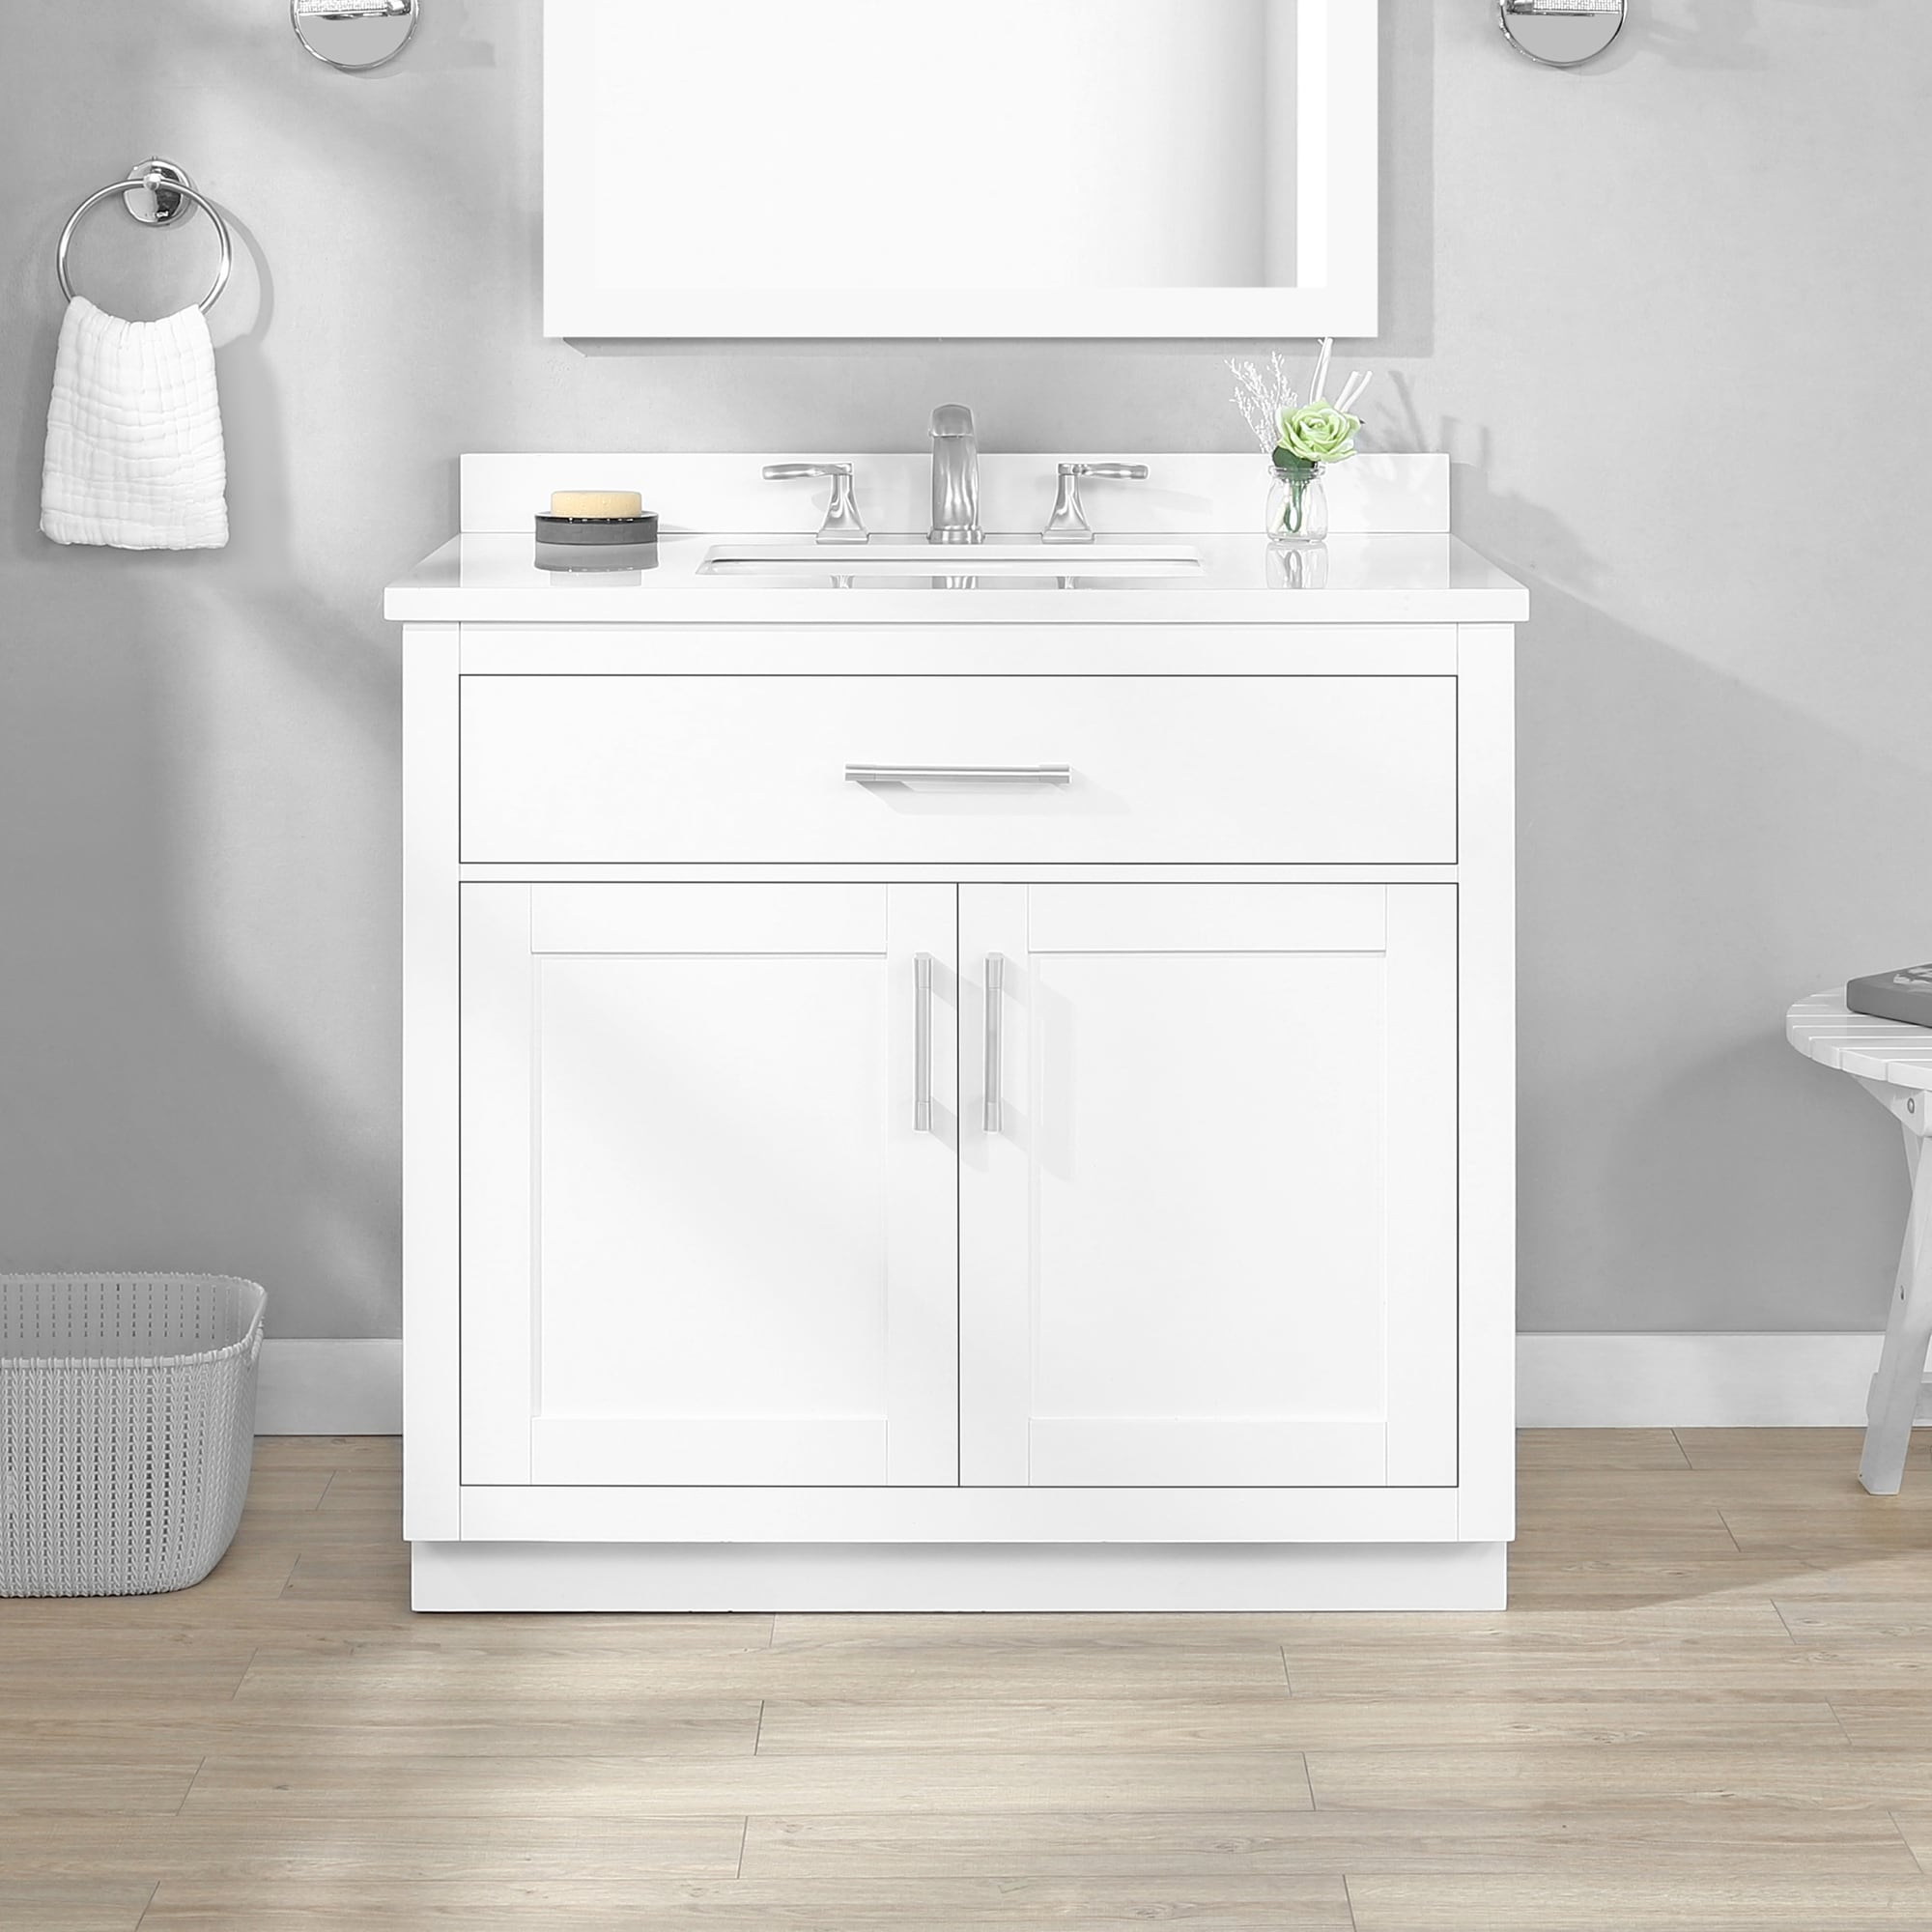 OVE Decors Bailey 36-in White Undermount Single Sink Bathroom Vanity ...